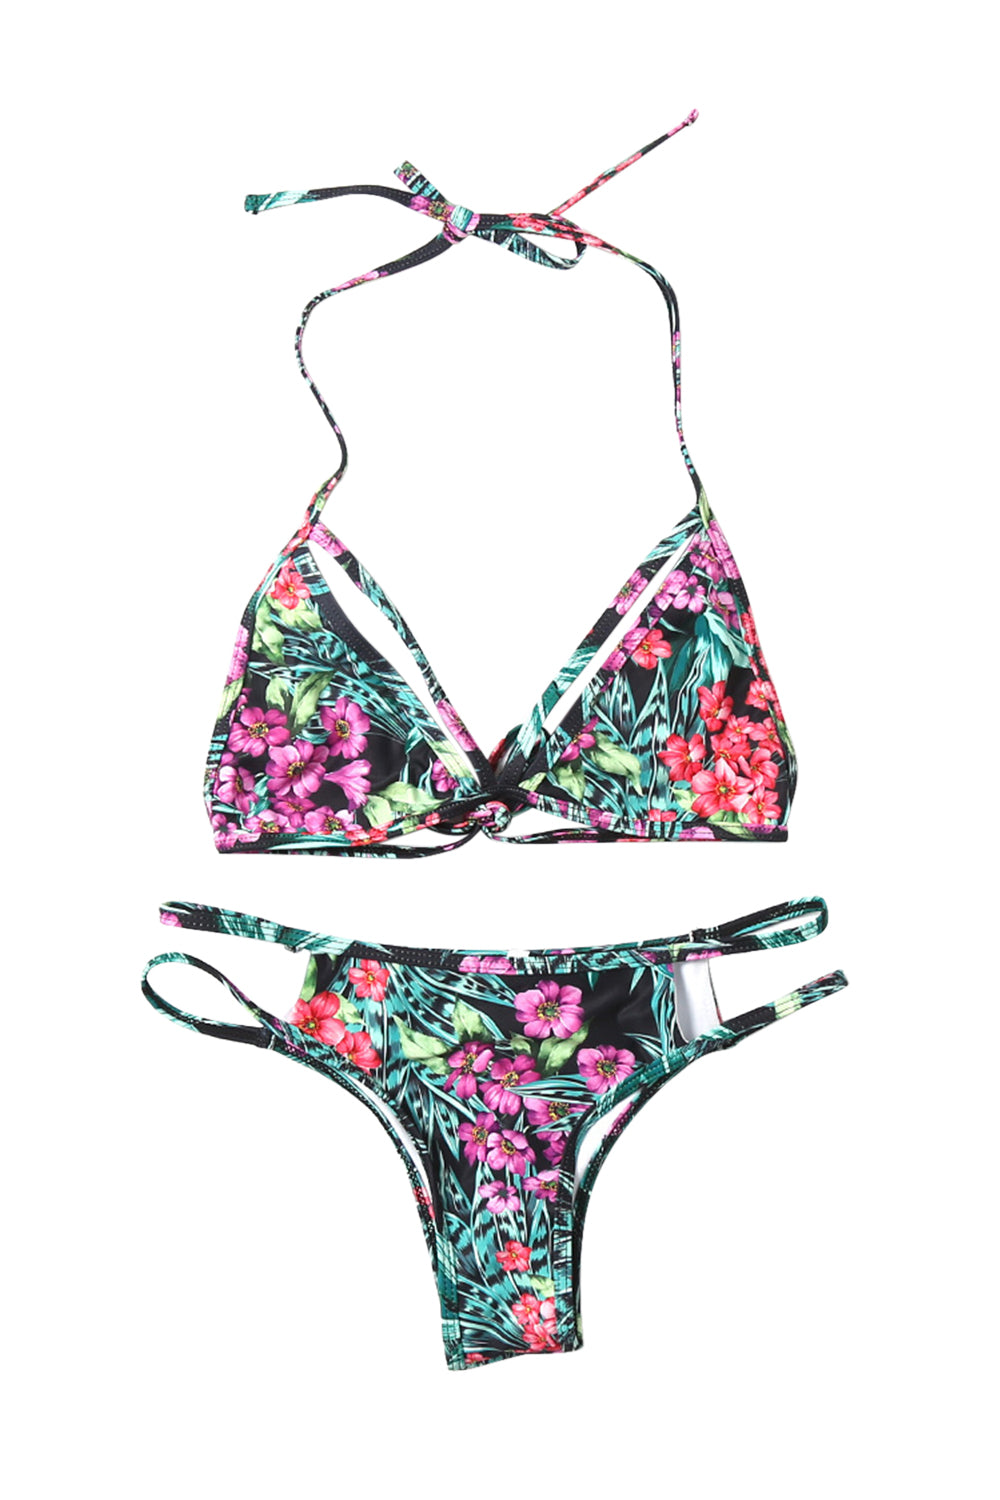 Iyasson Tropical Flower Printing Halter Bikini Top with Double-string Bottom